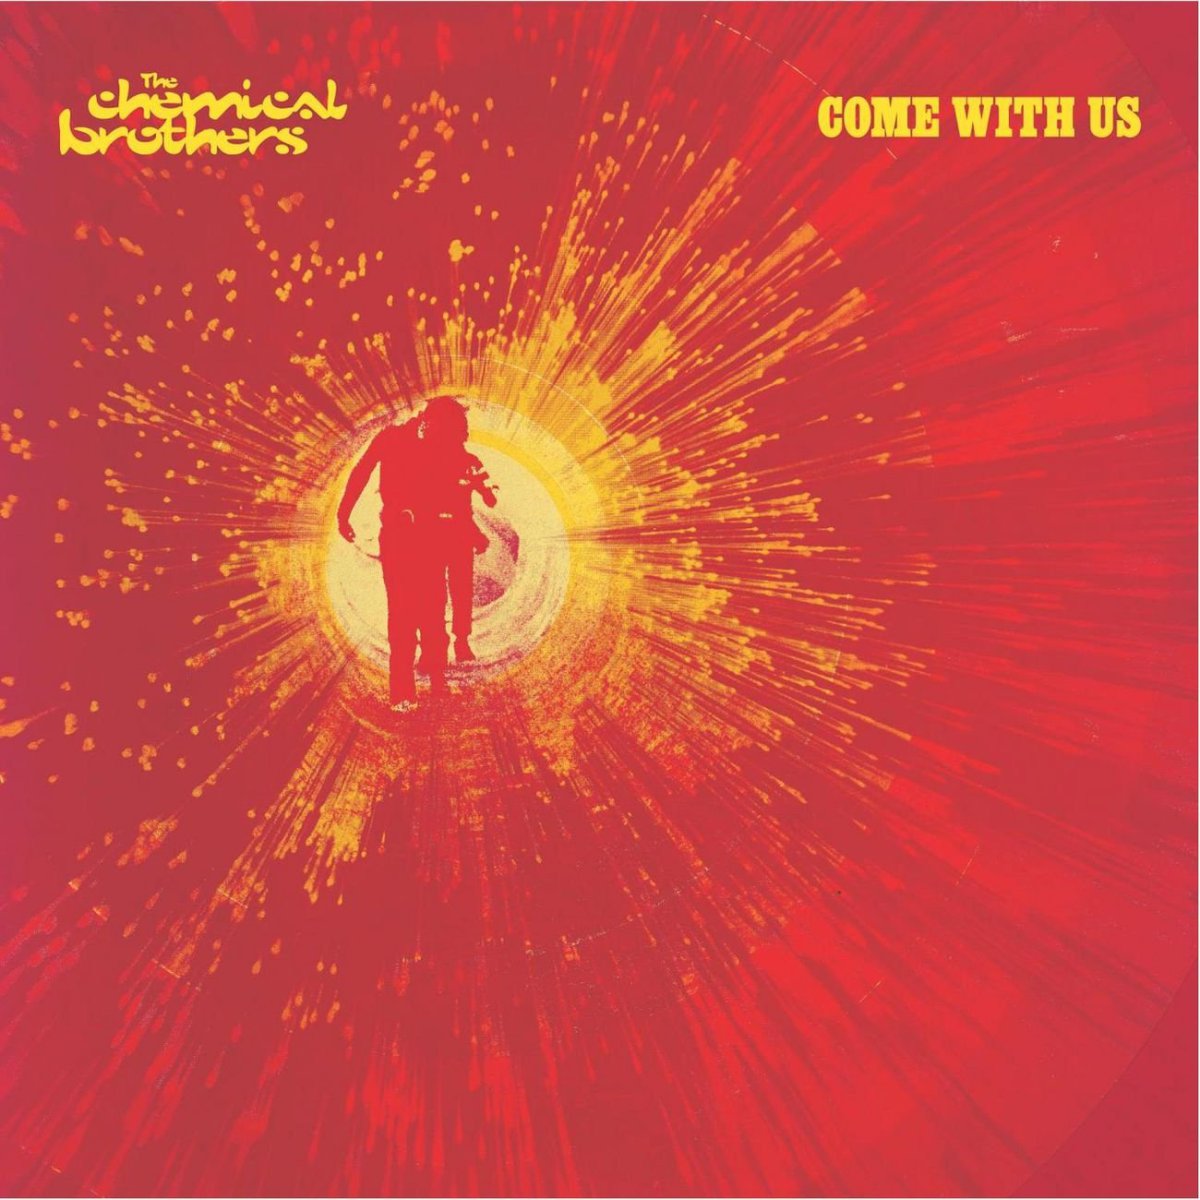 Charlie Jiménez (Locutor de LOS40) - Chemical Brothers - Come with us